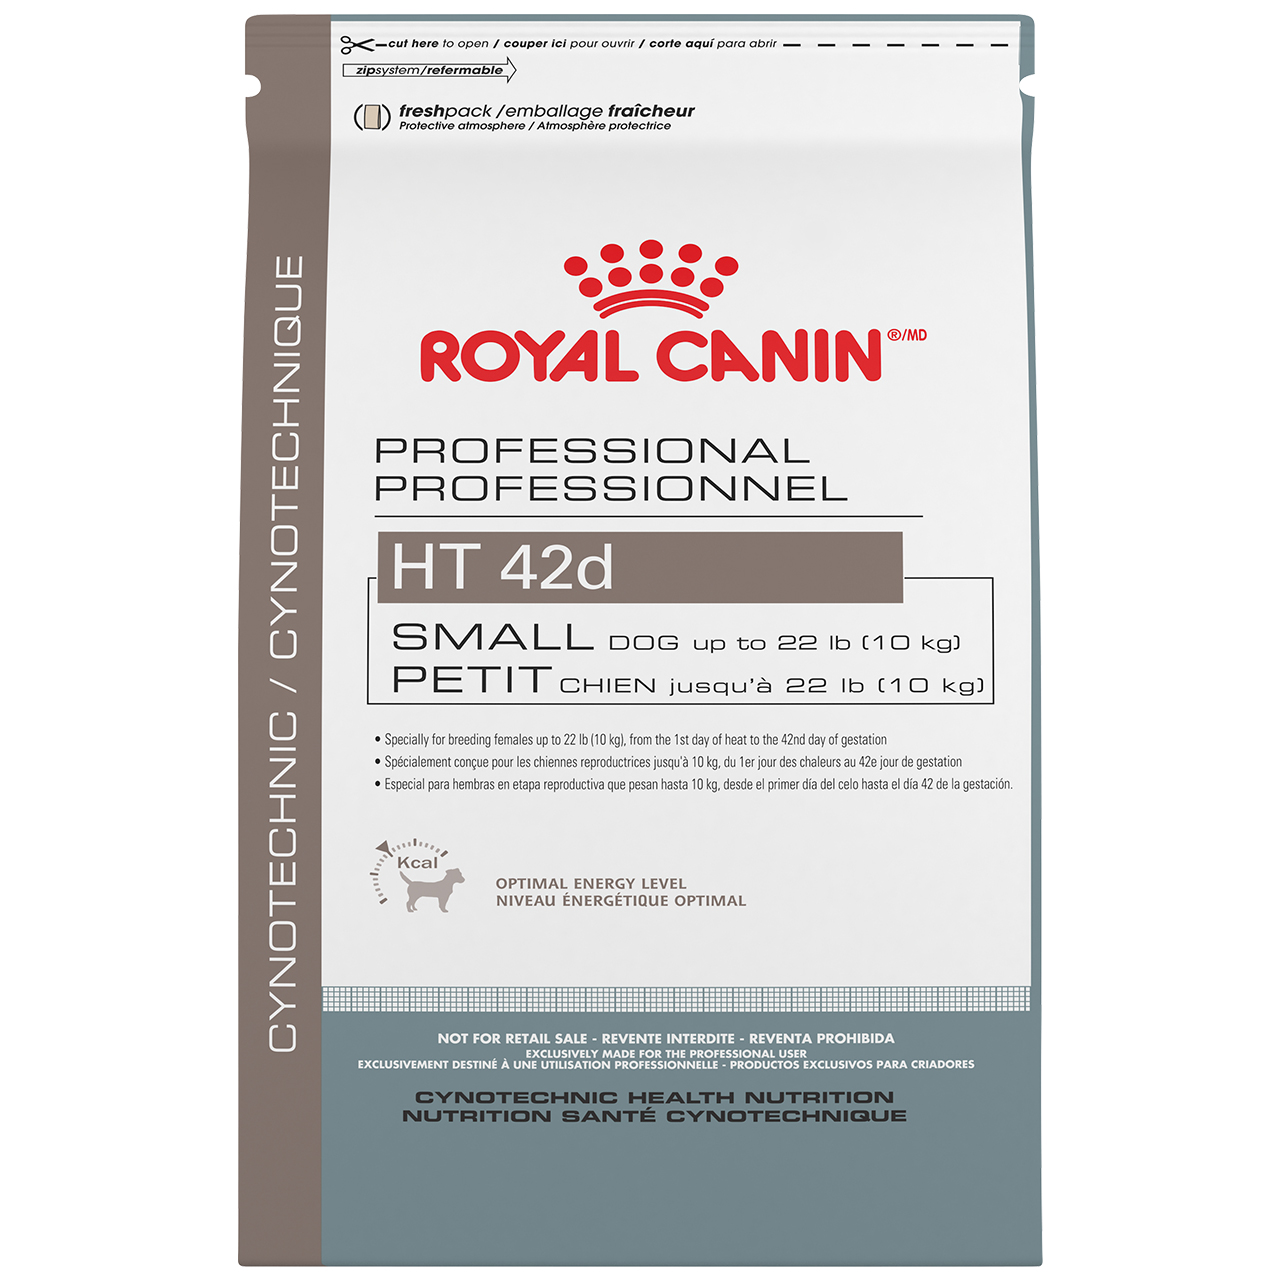 Vervolgen bijgeloof Sanctie Royal Canin Professional Dog Range - Royal Canin